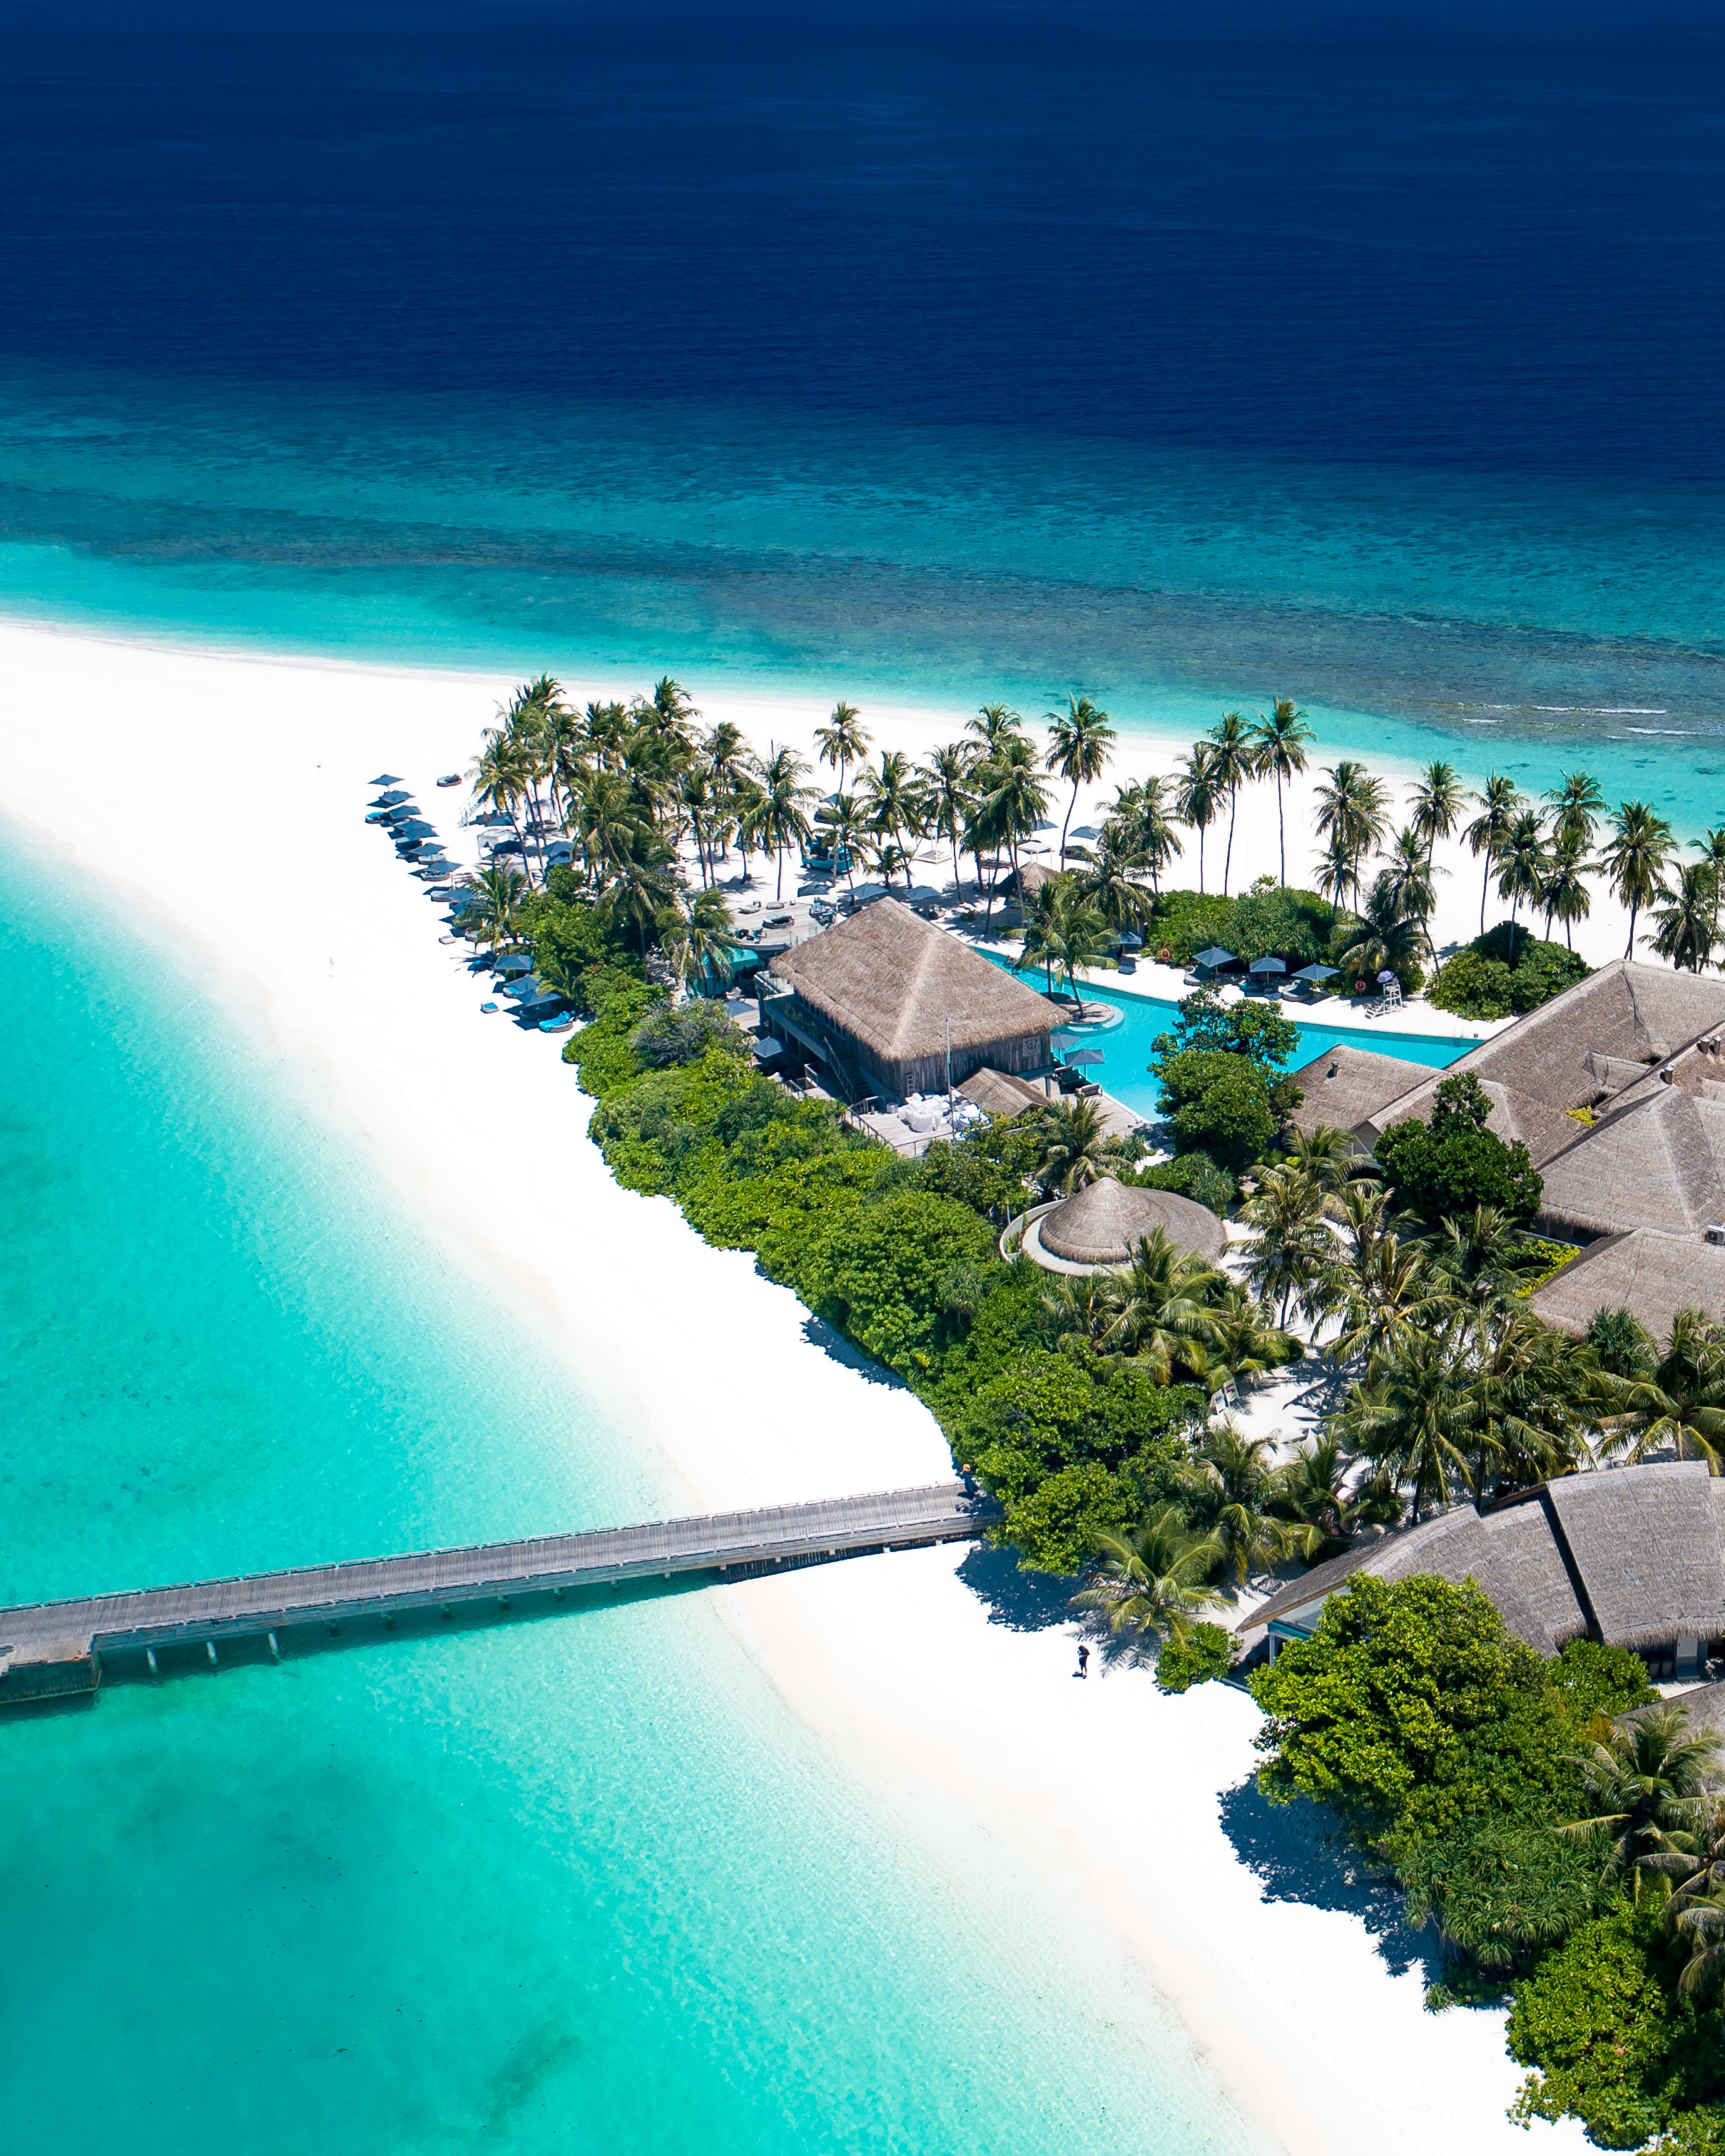 Best Mobile Maldives Backgrounds